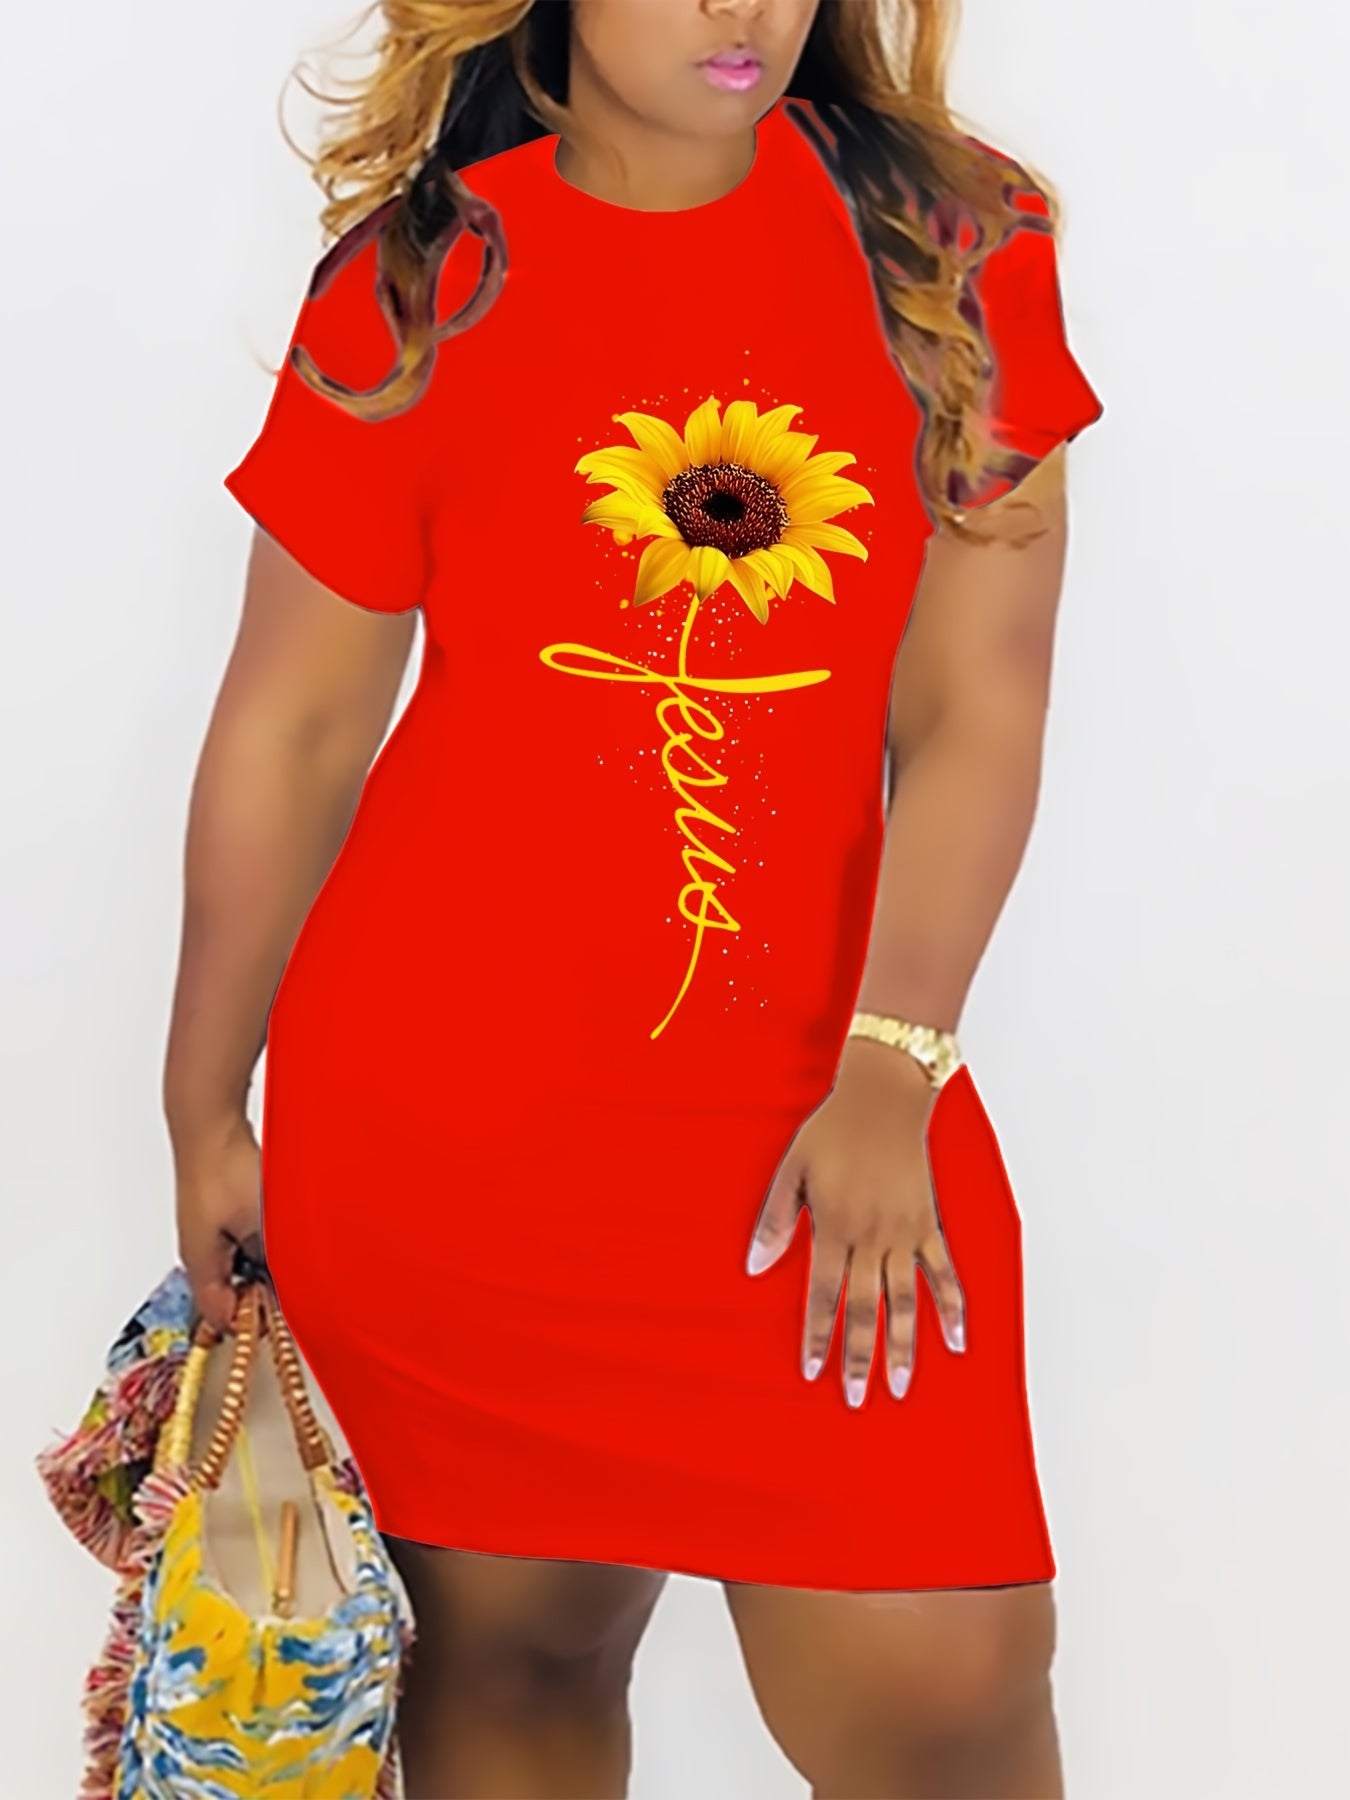 Jesus (sunflower) Plus Size Women's Christian Casual Dress claimedbygoddesigns